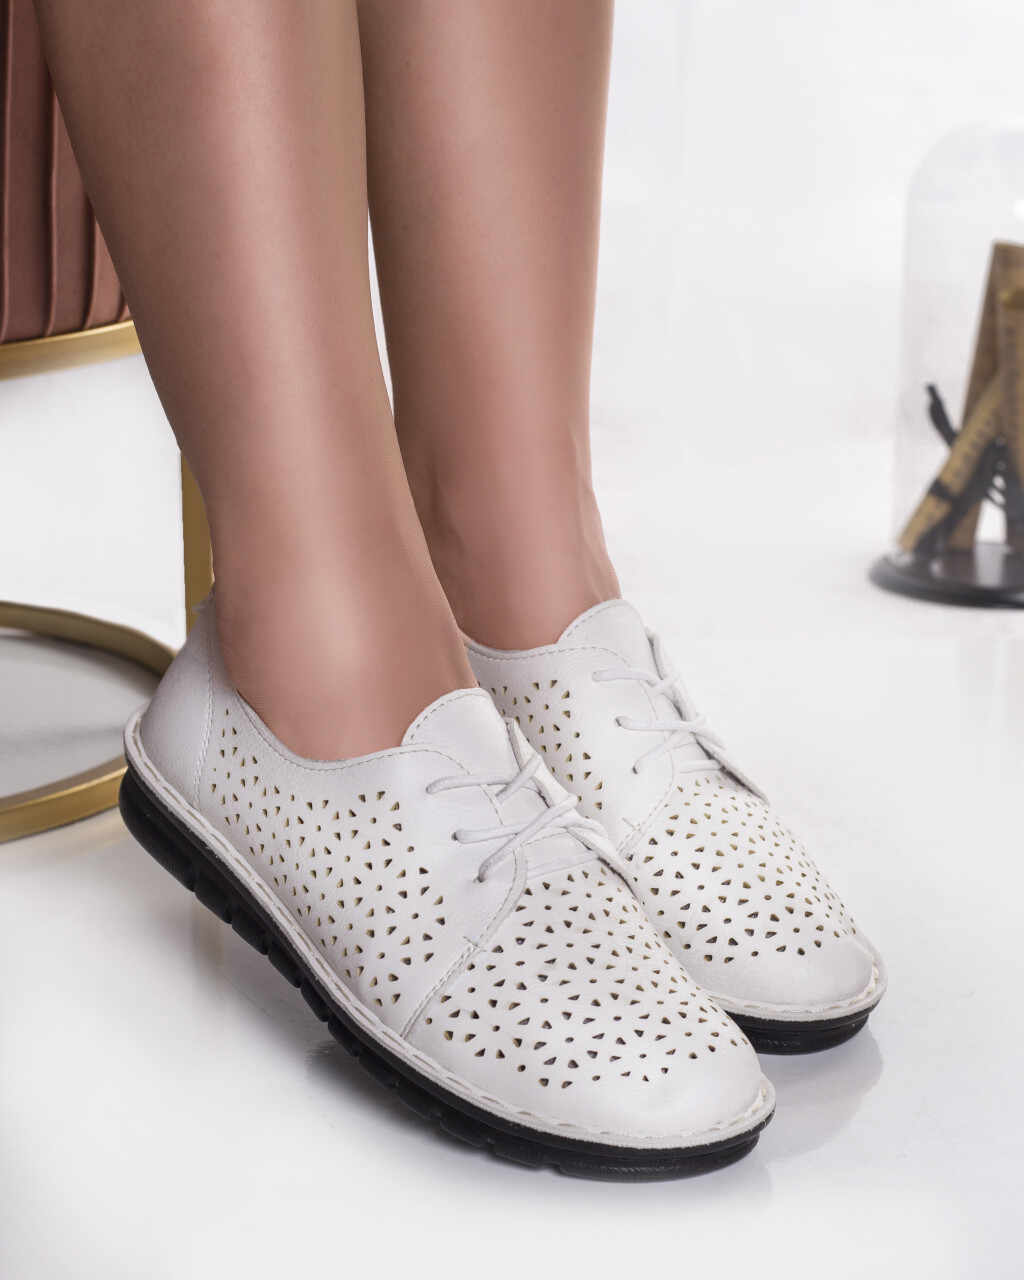 Pantofi dama casual albi piele ecologica loino